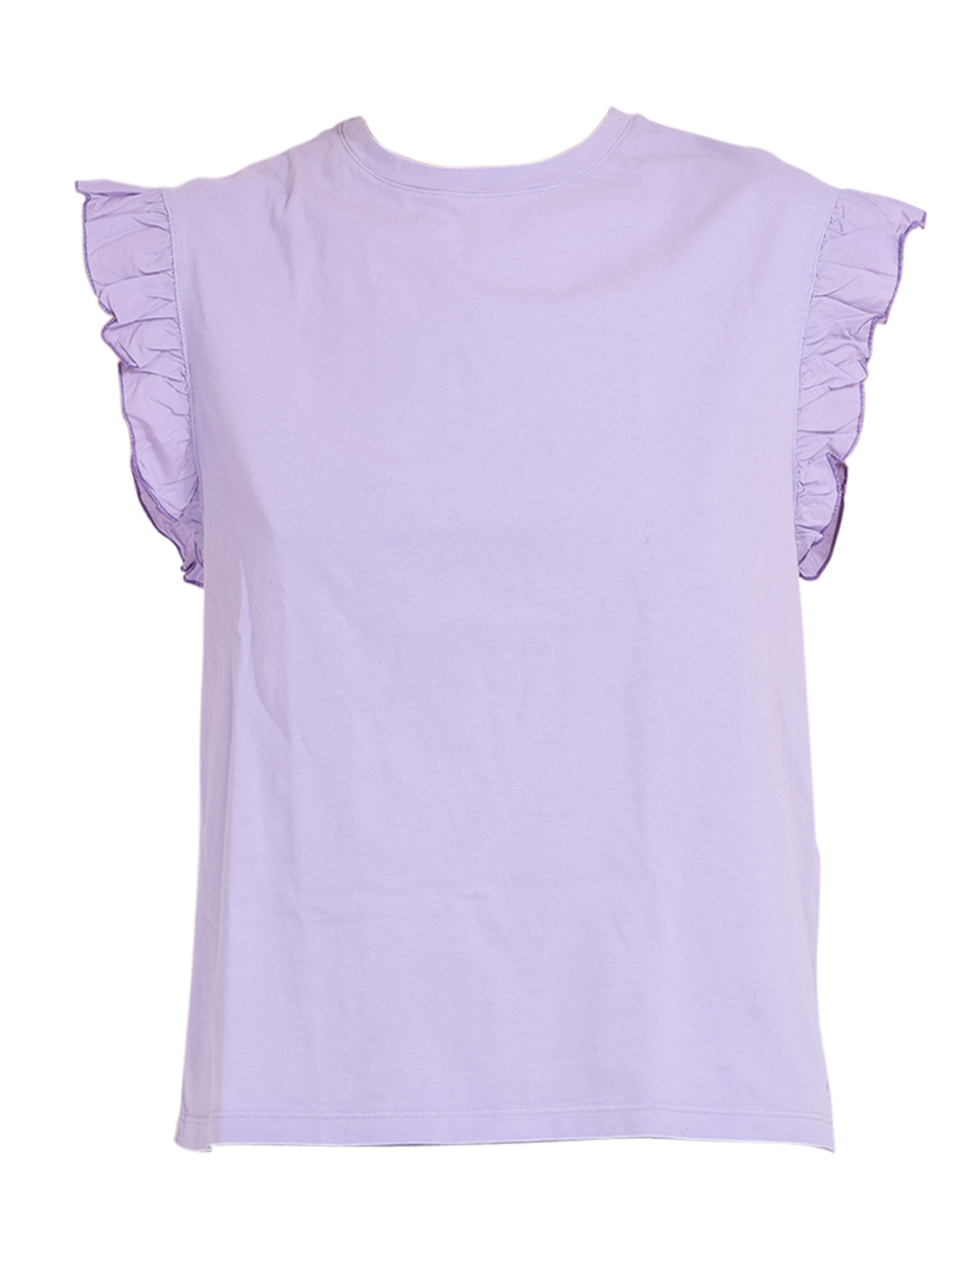 BELLEROSE Visam Ruffle T-Shirt in Lavender Product Shot 